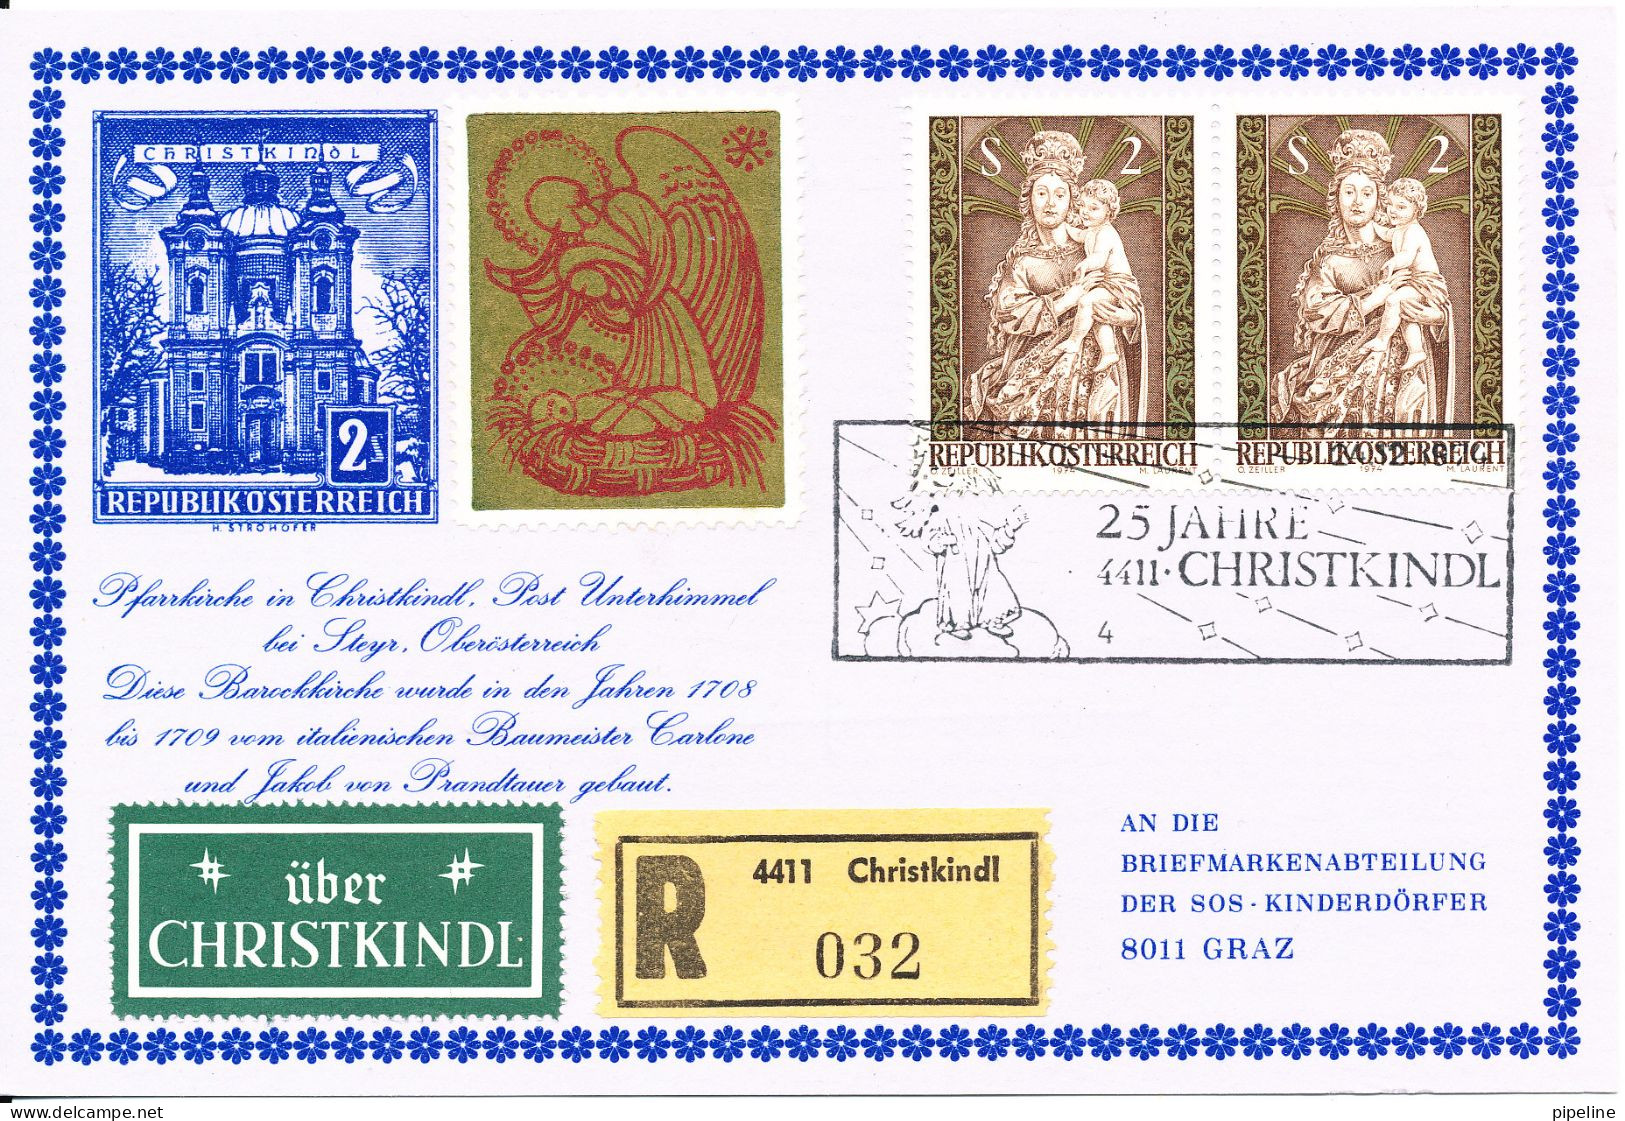 Austria Registered Card Christkindl  24-12-1974 Sent To SOS Kinderdörfer Graz - Covers & Documents